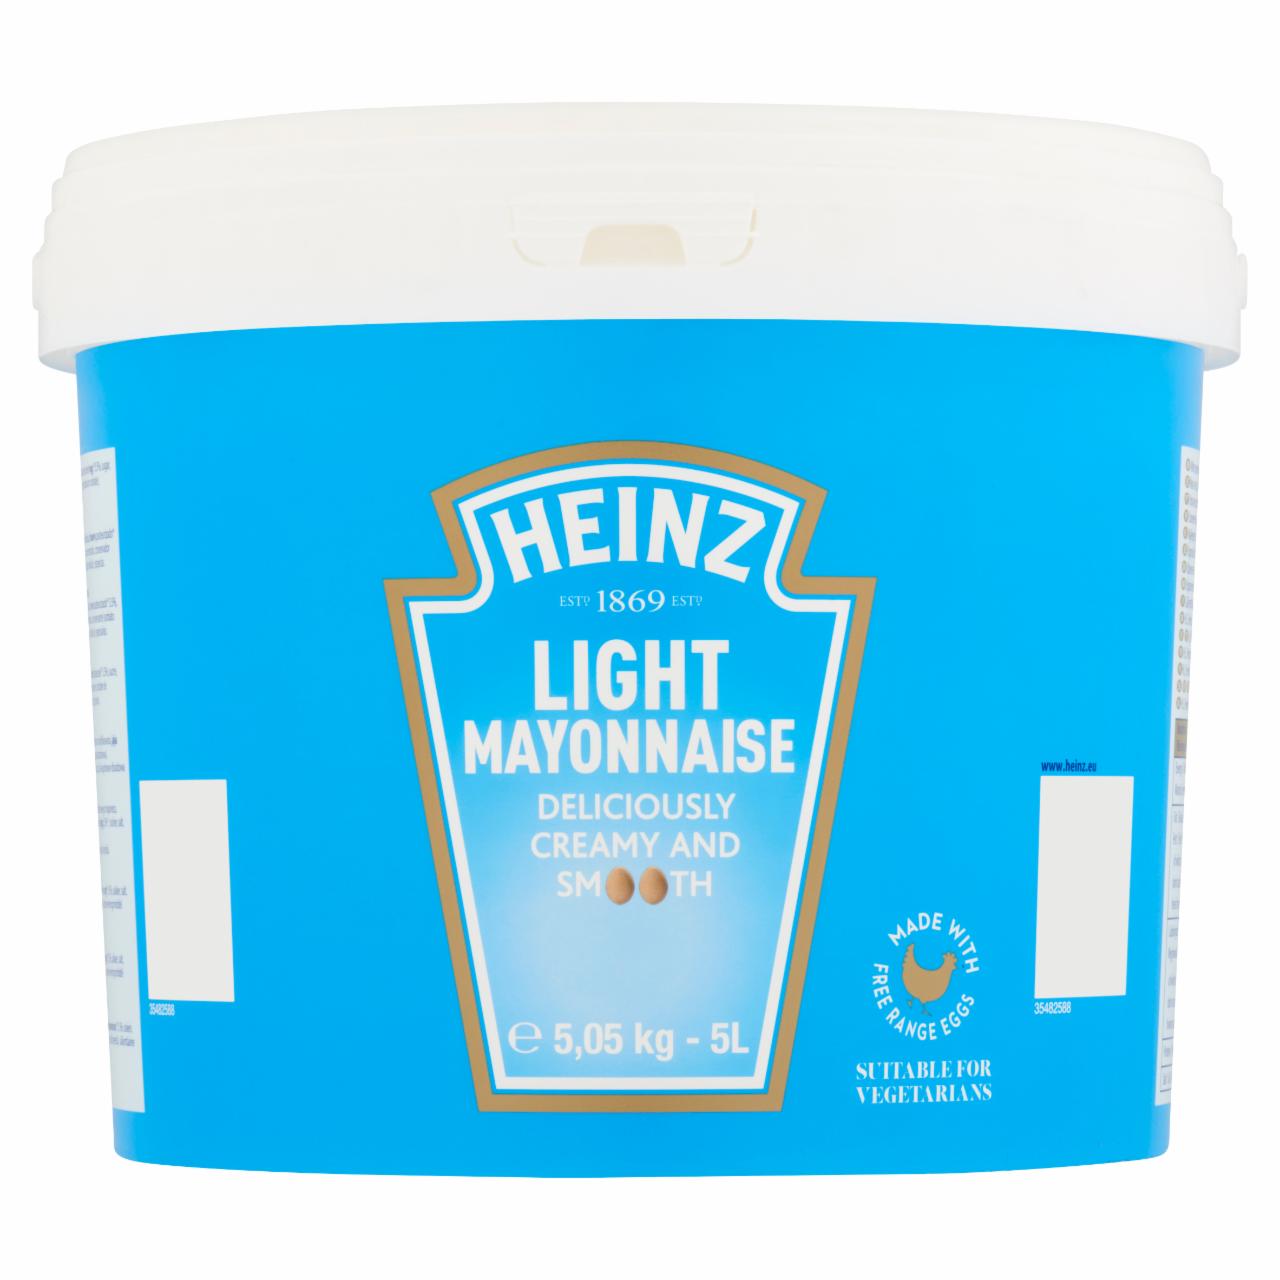 Képek - Heinz Light majonéz 5,05 kg